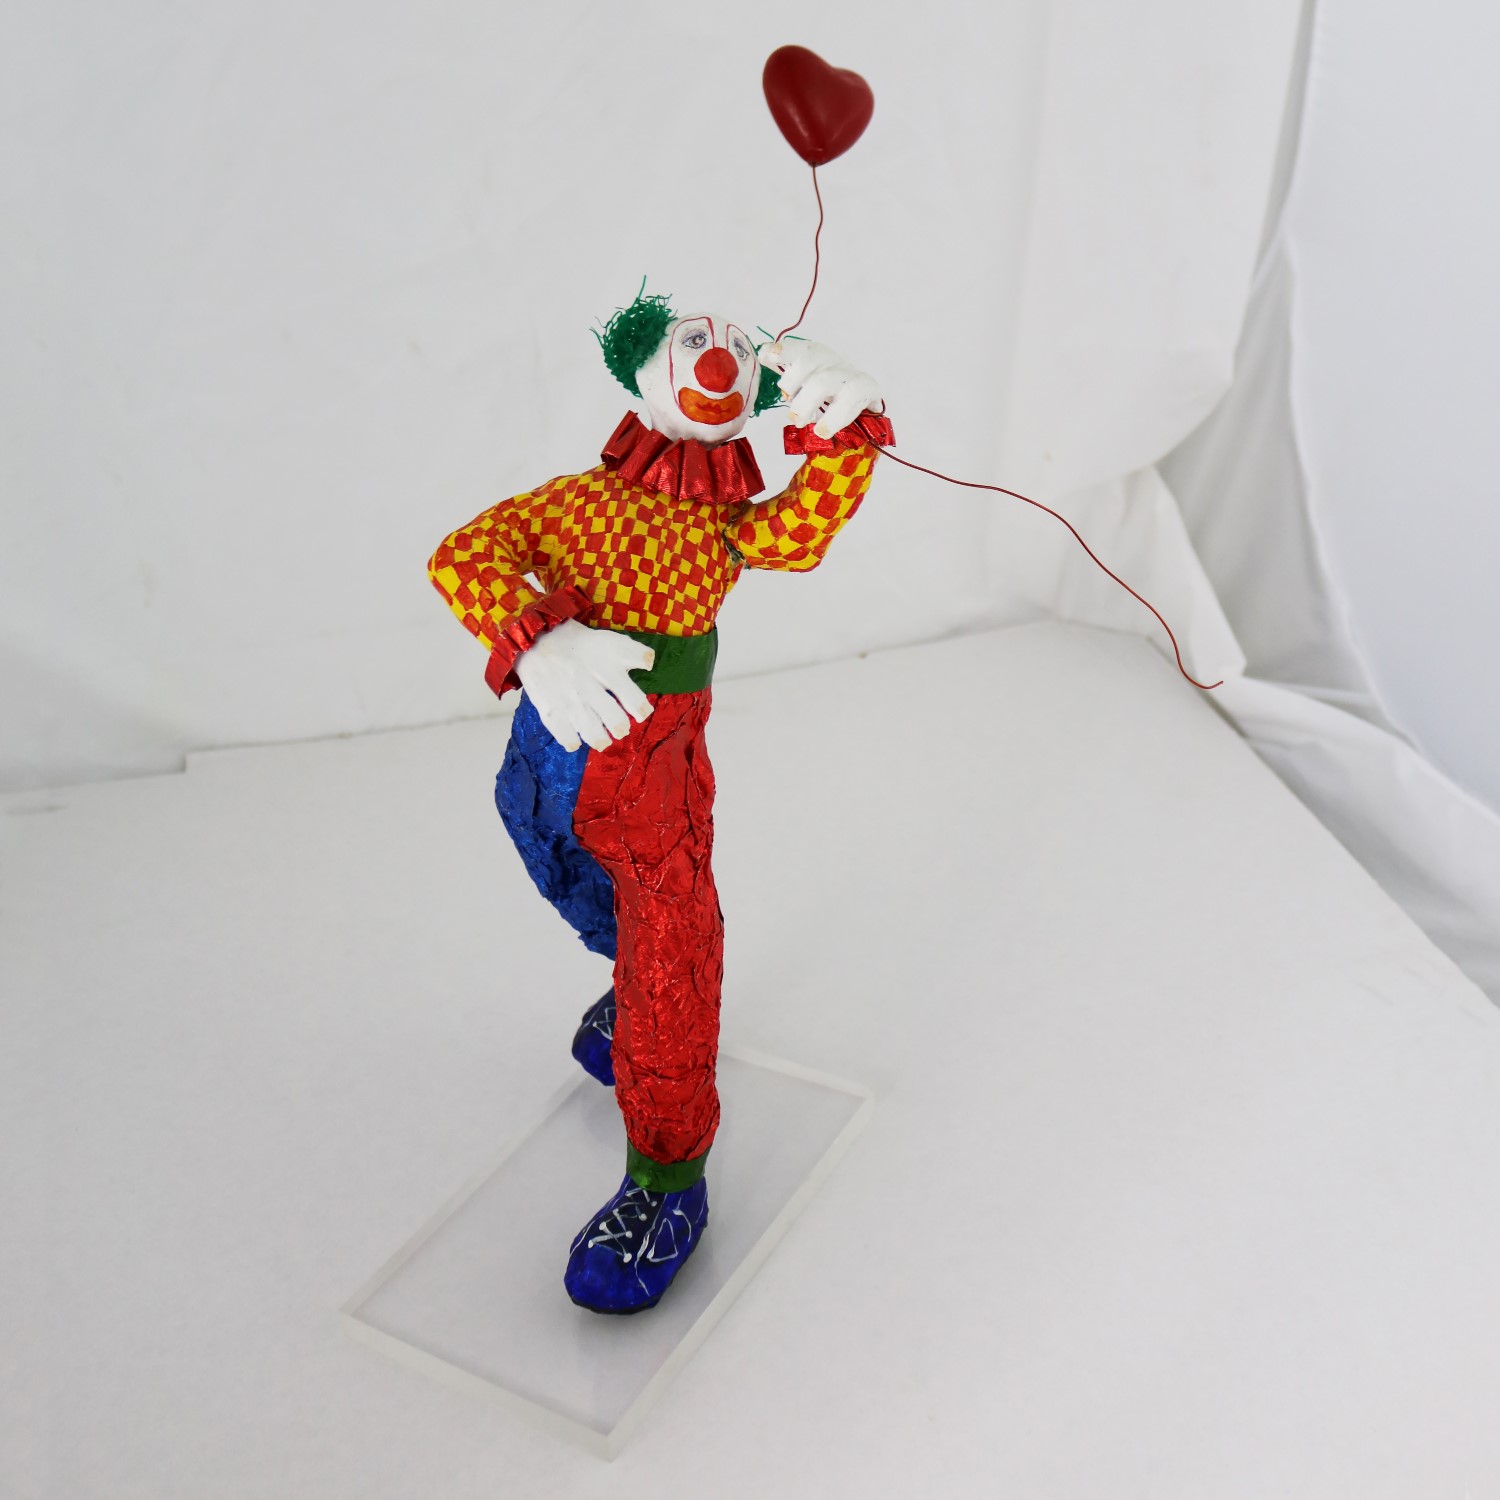 Fun Bright Mixed Media Folk Art Clown Sculpture with Balloon Paper Maché